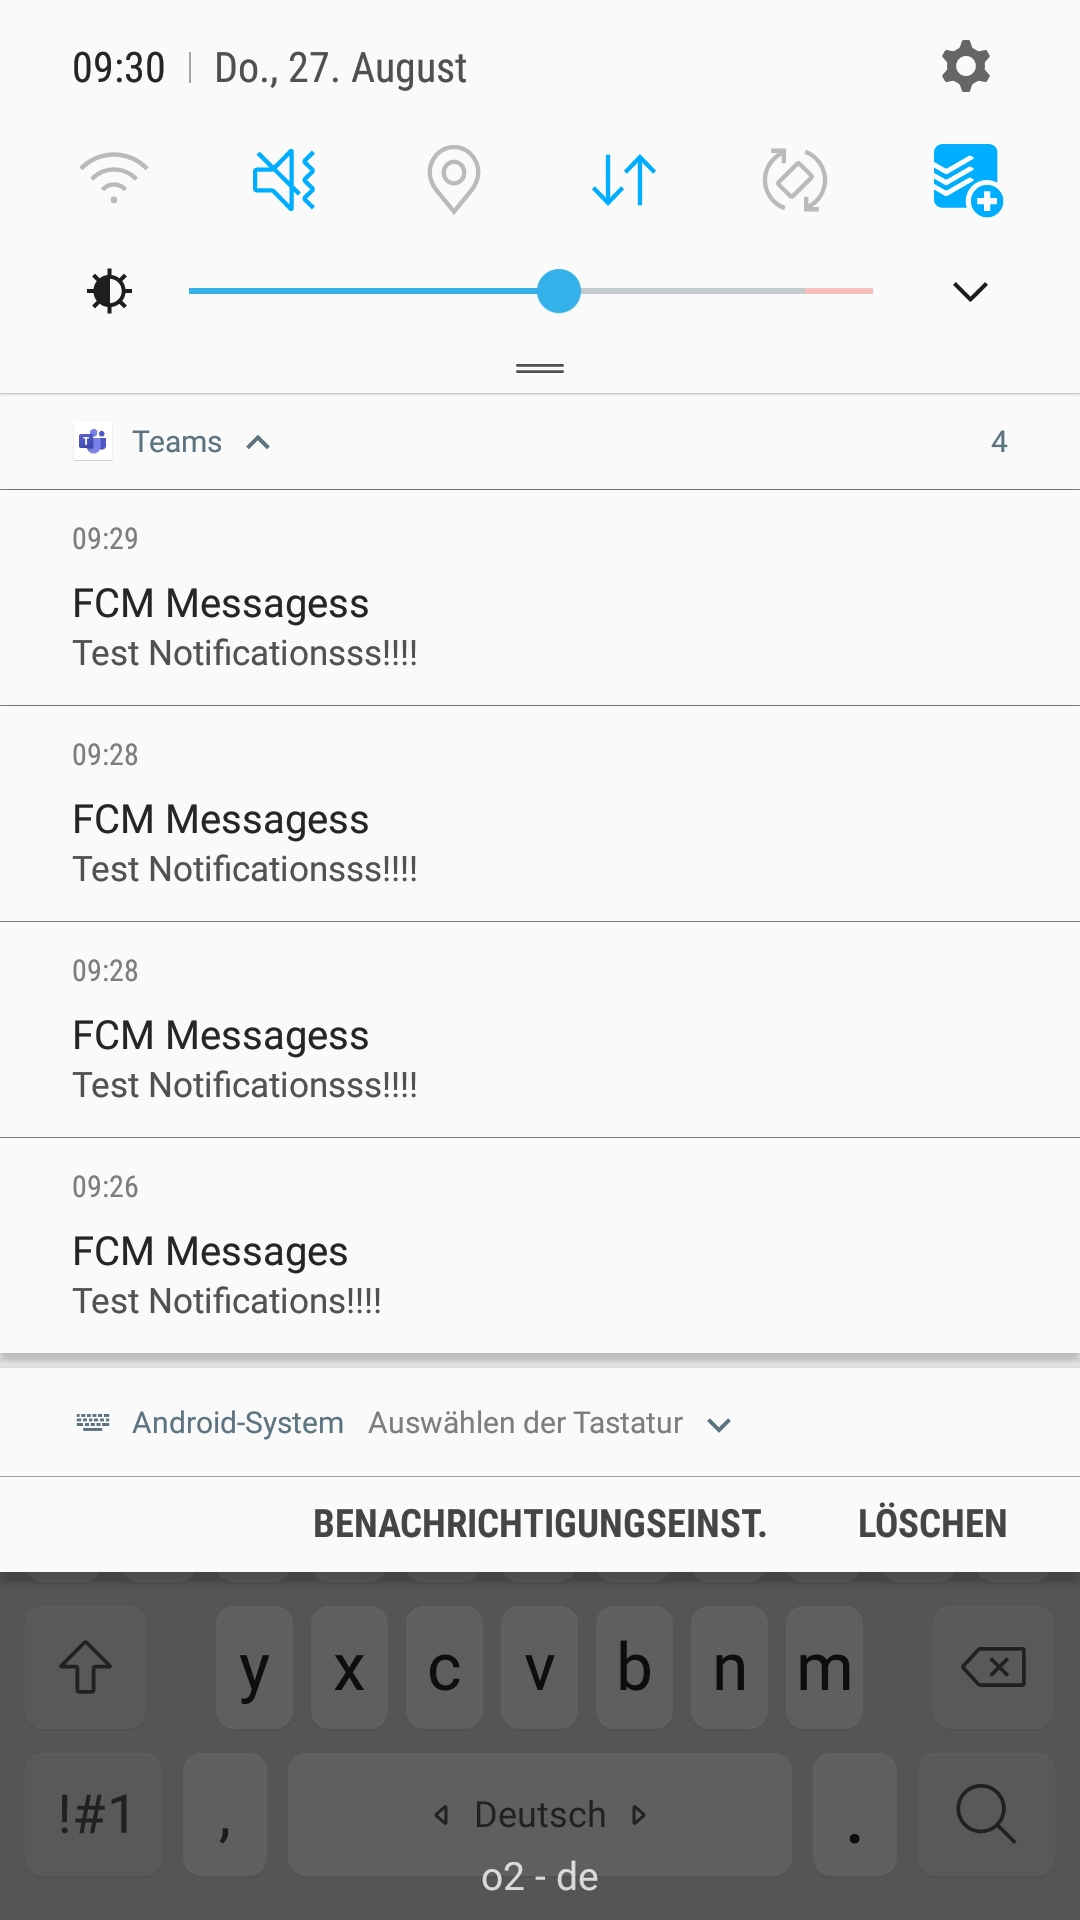 FCM Messages / FCM Messagess [sic] --- Test Notifications!!! / Test Notificationsss!!!! 07509dab-1fe9-41c7-a5ab-c7add2dbc1b2?upload=true.jpg